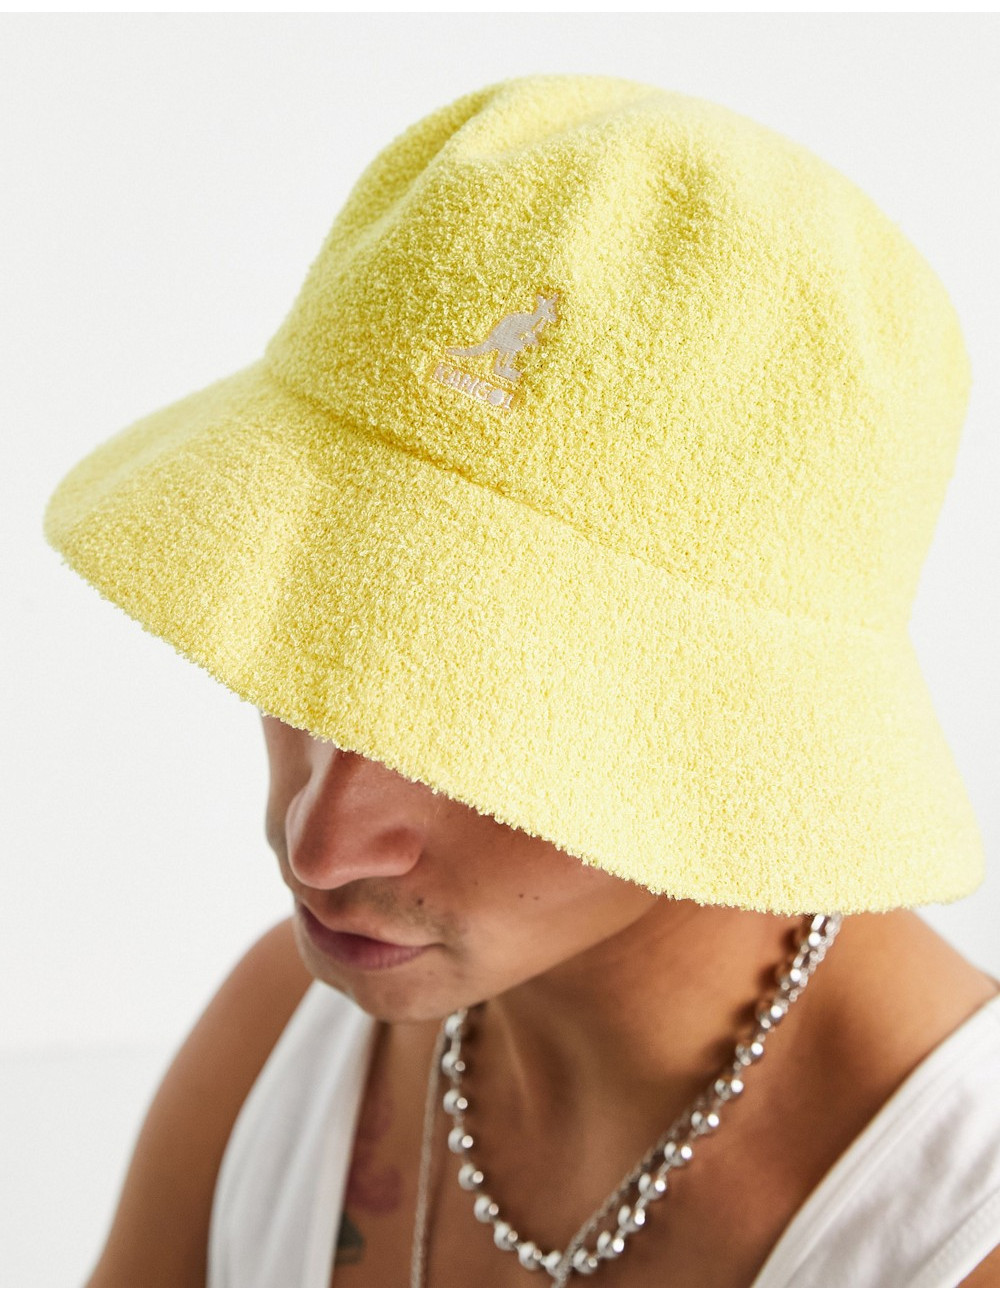 Kangol Bermuda hat in yellow